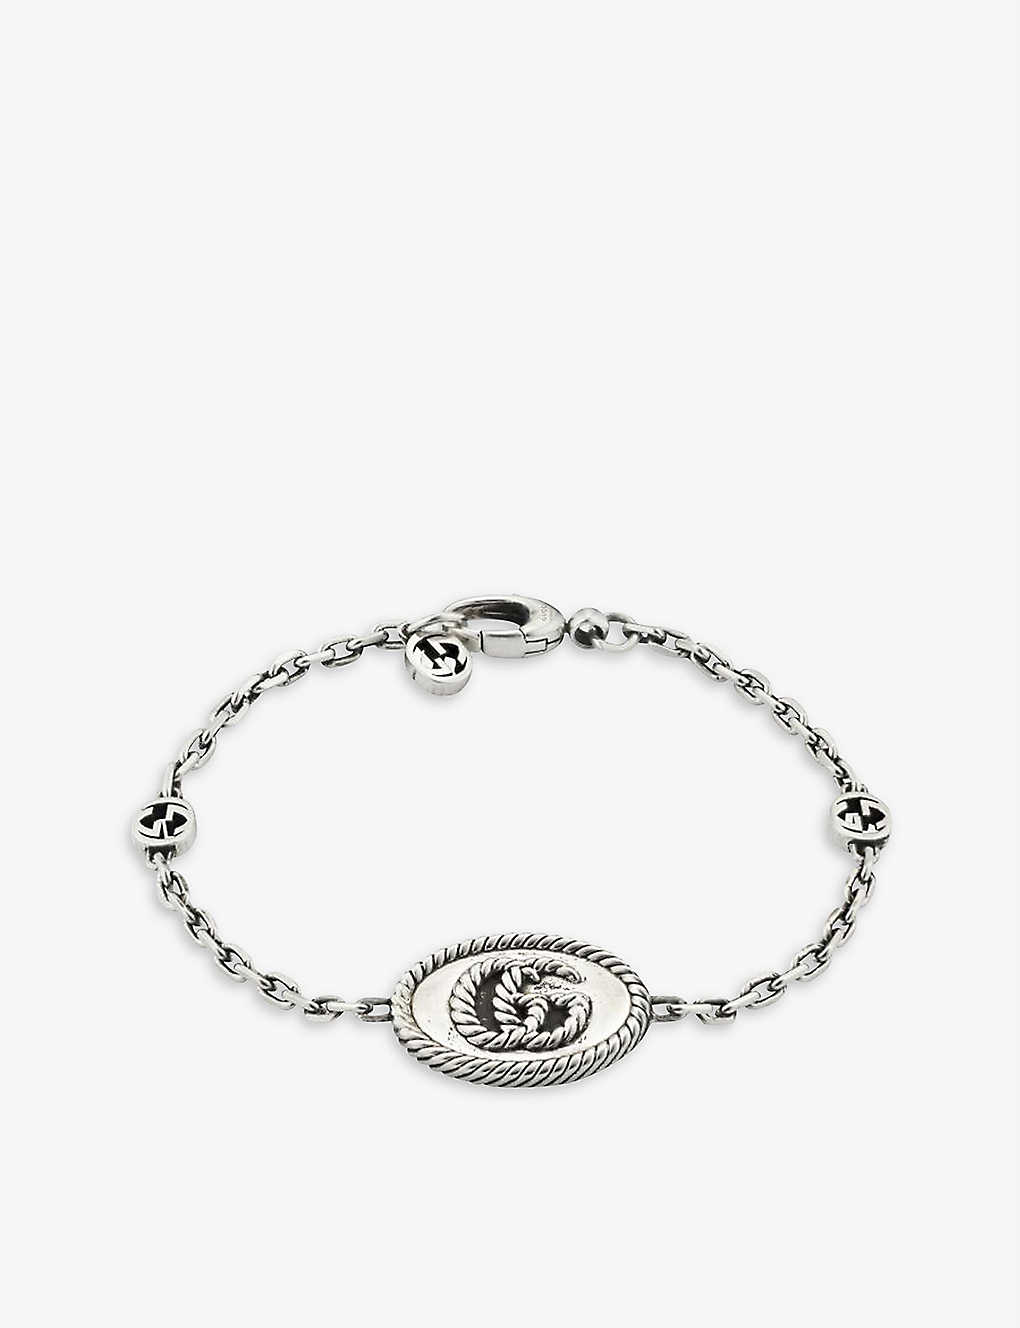 Marmont sterling silver bracelet(8869907)